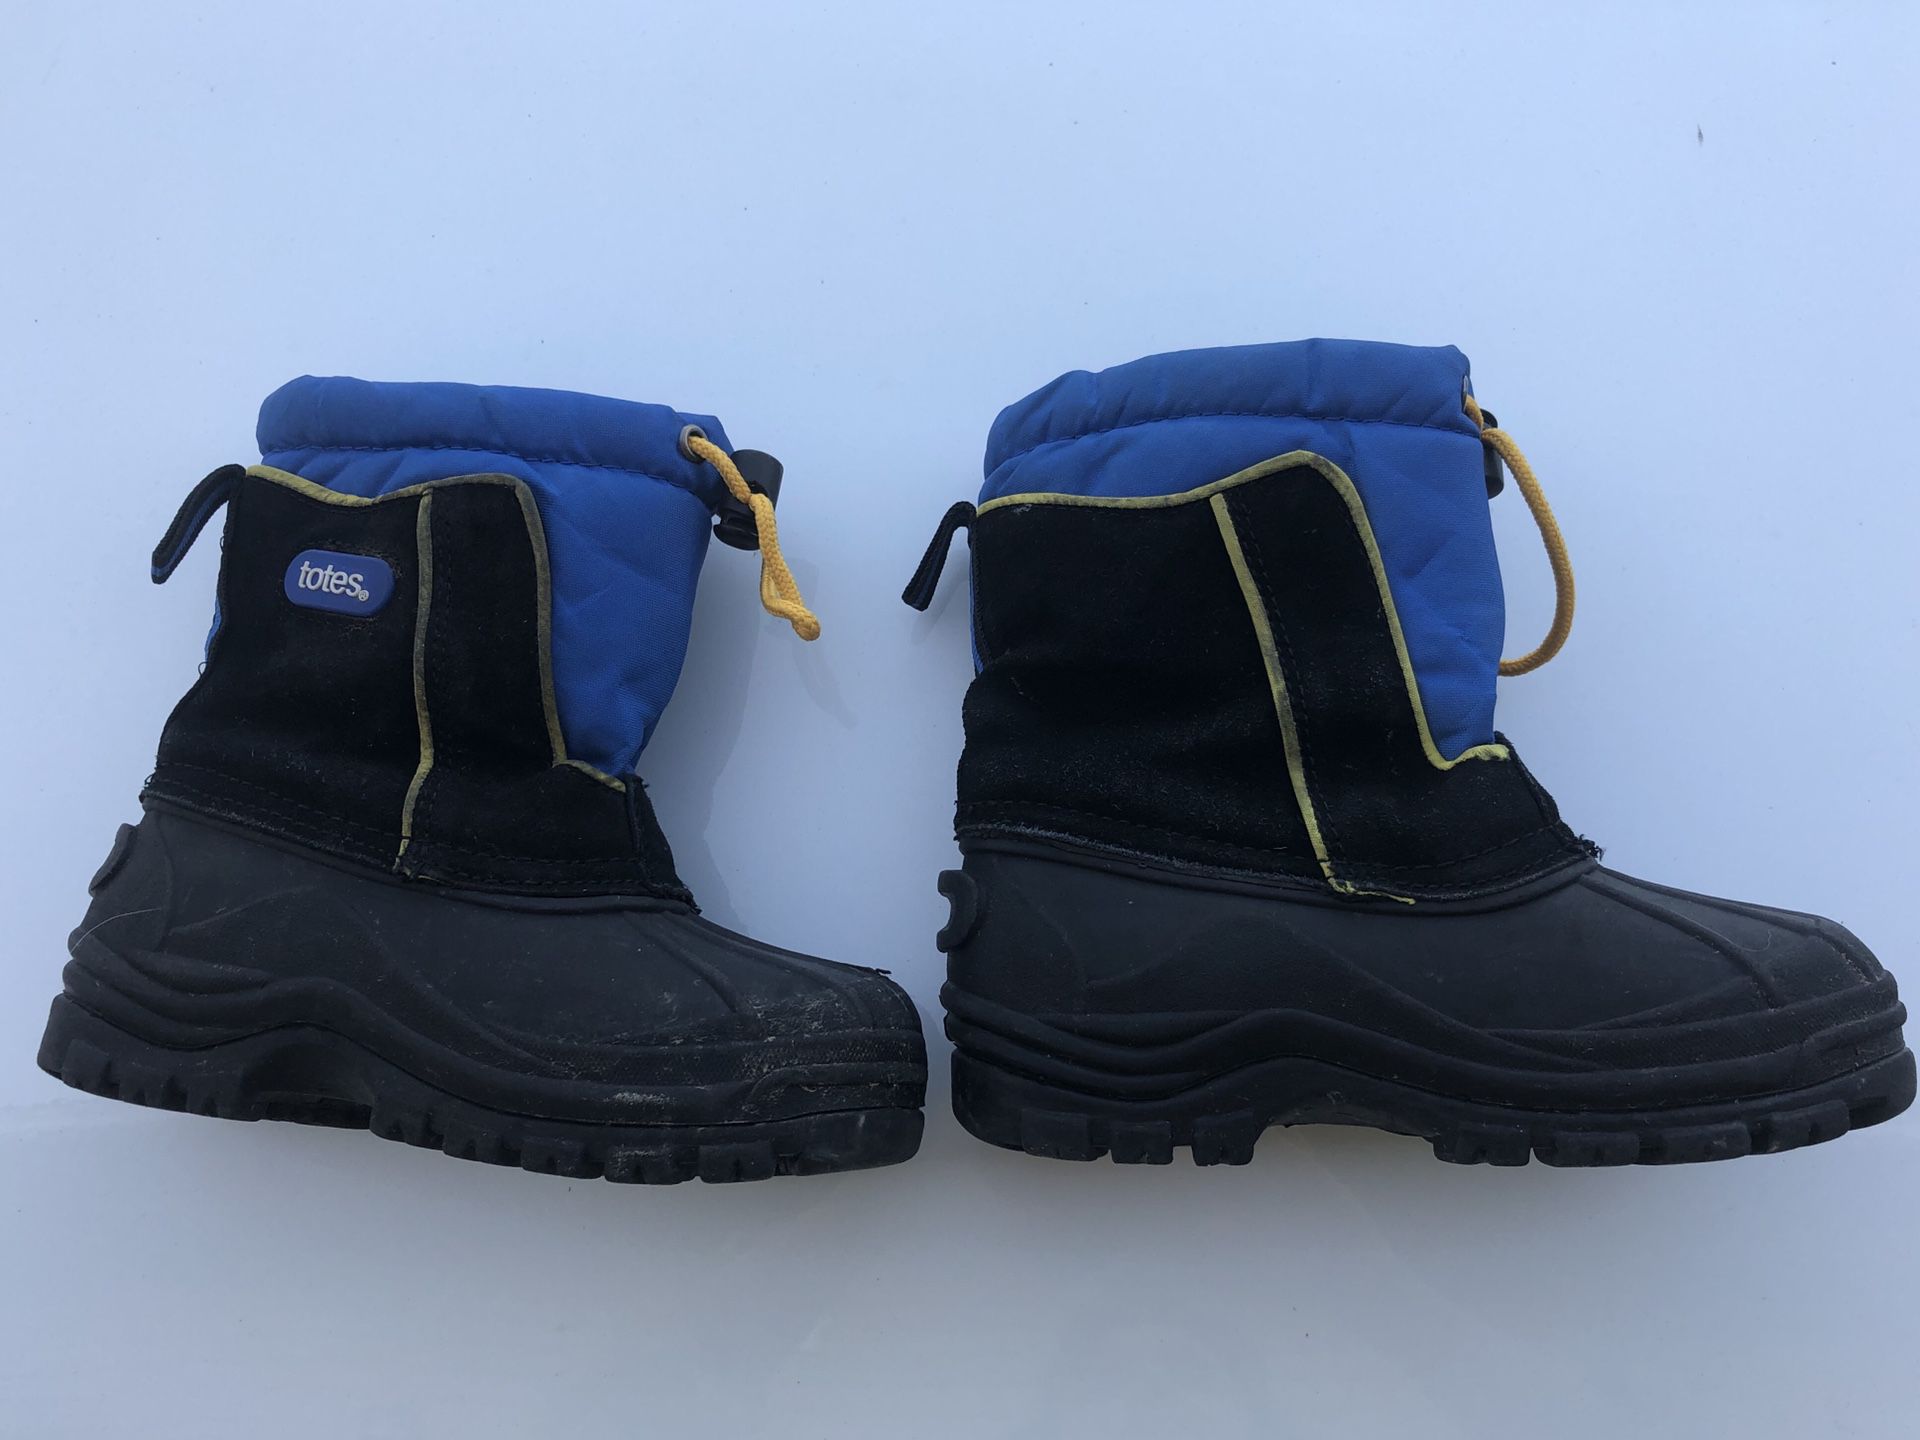 Snow boots - kids size 12